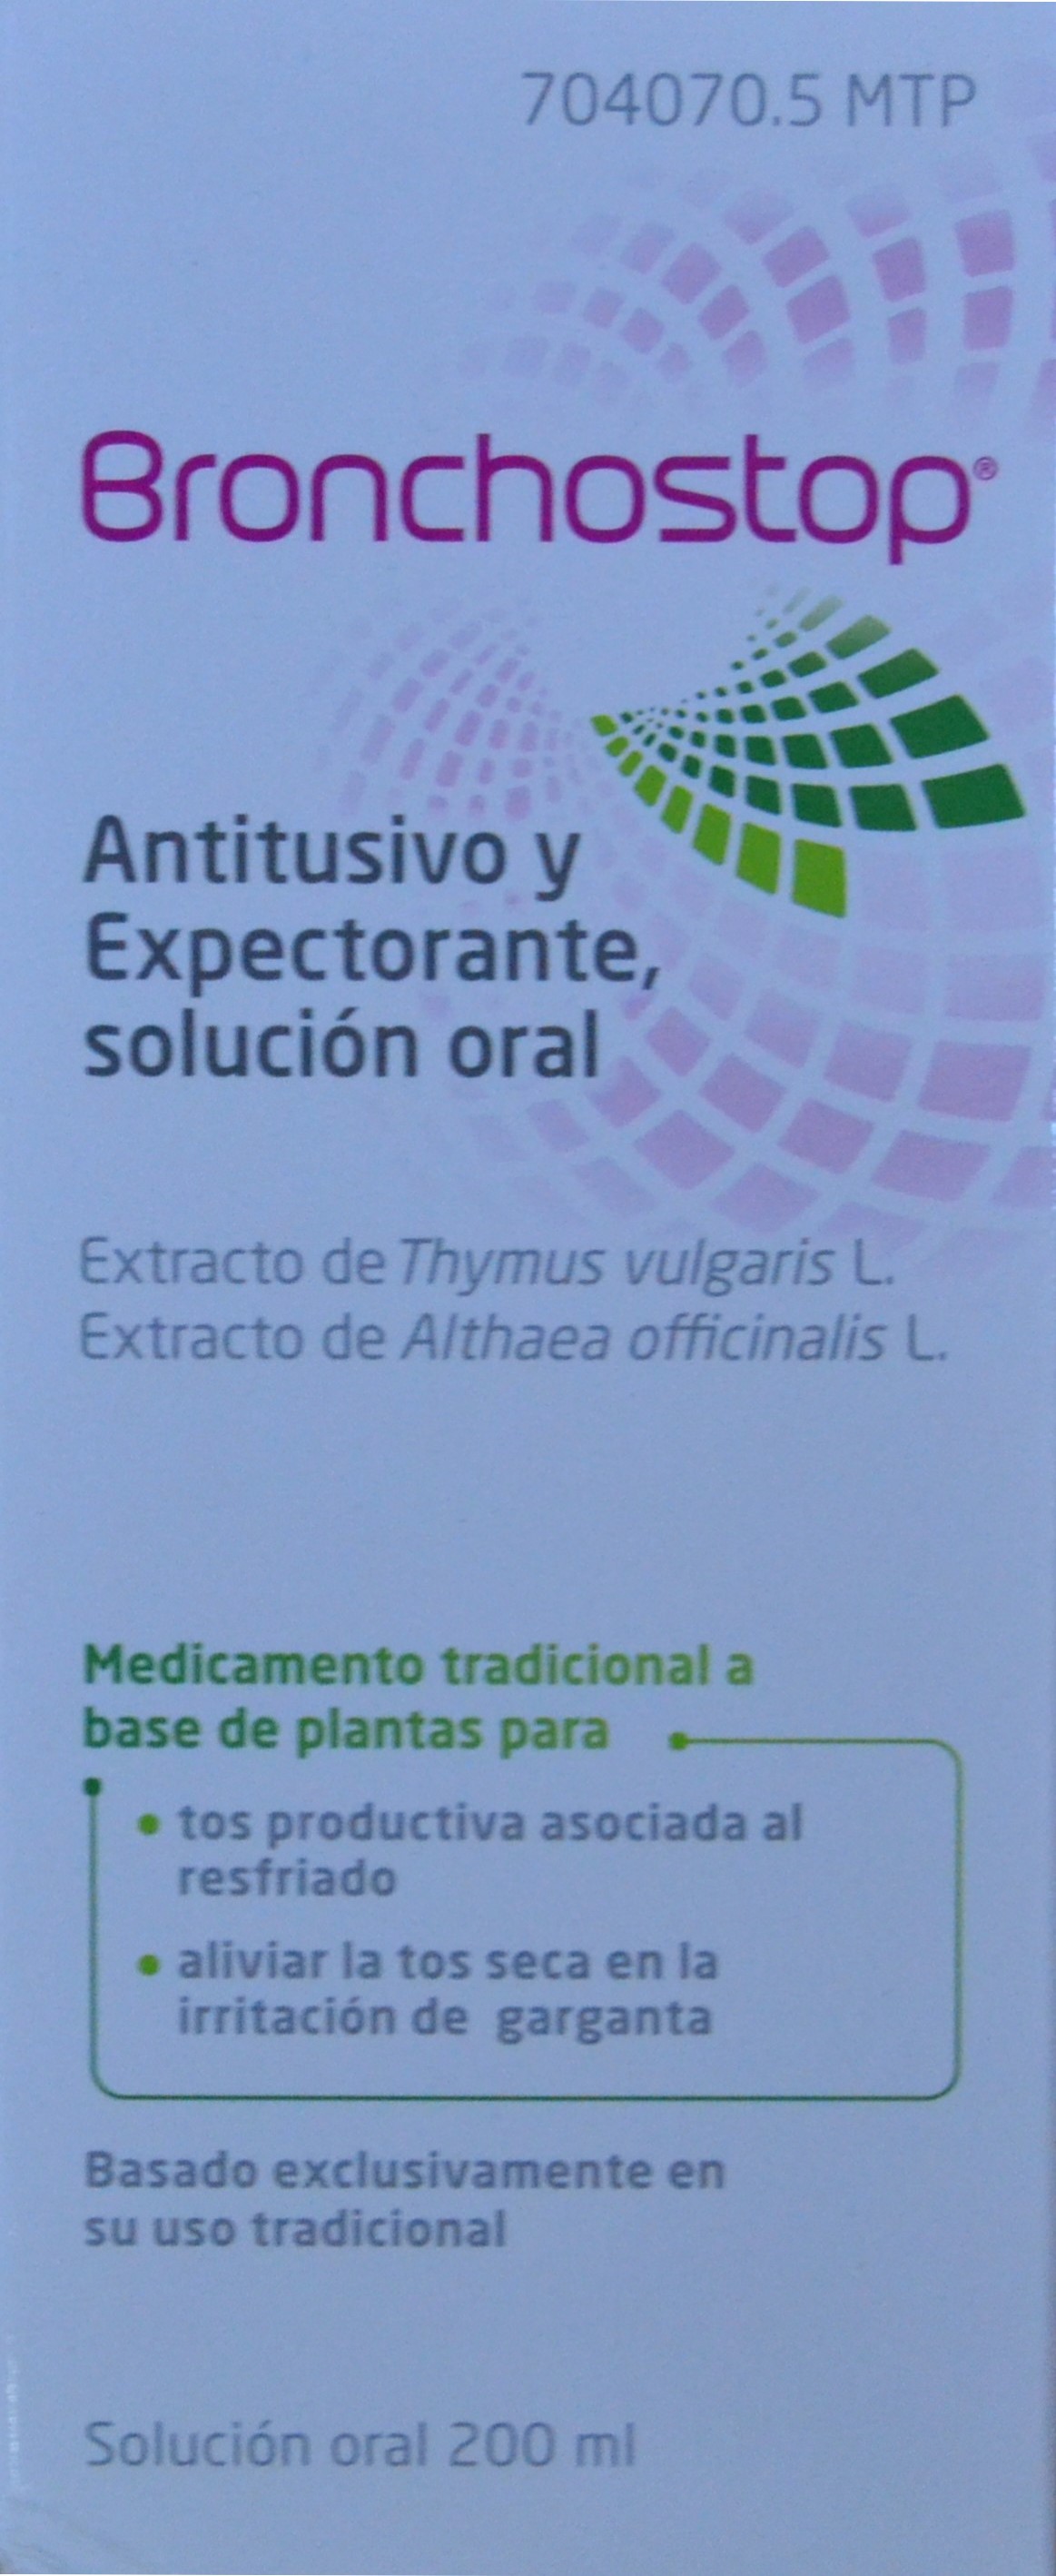 Bronchostop Antitusivo Expectorante Solución Oral, 200 ml